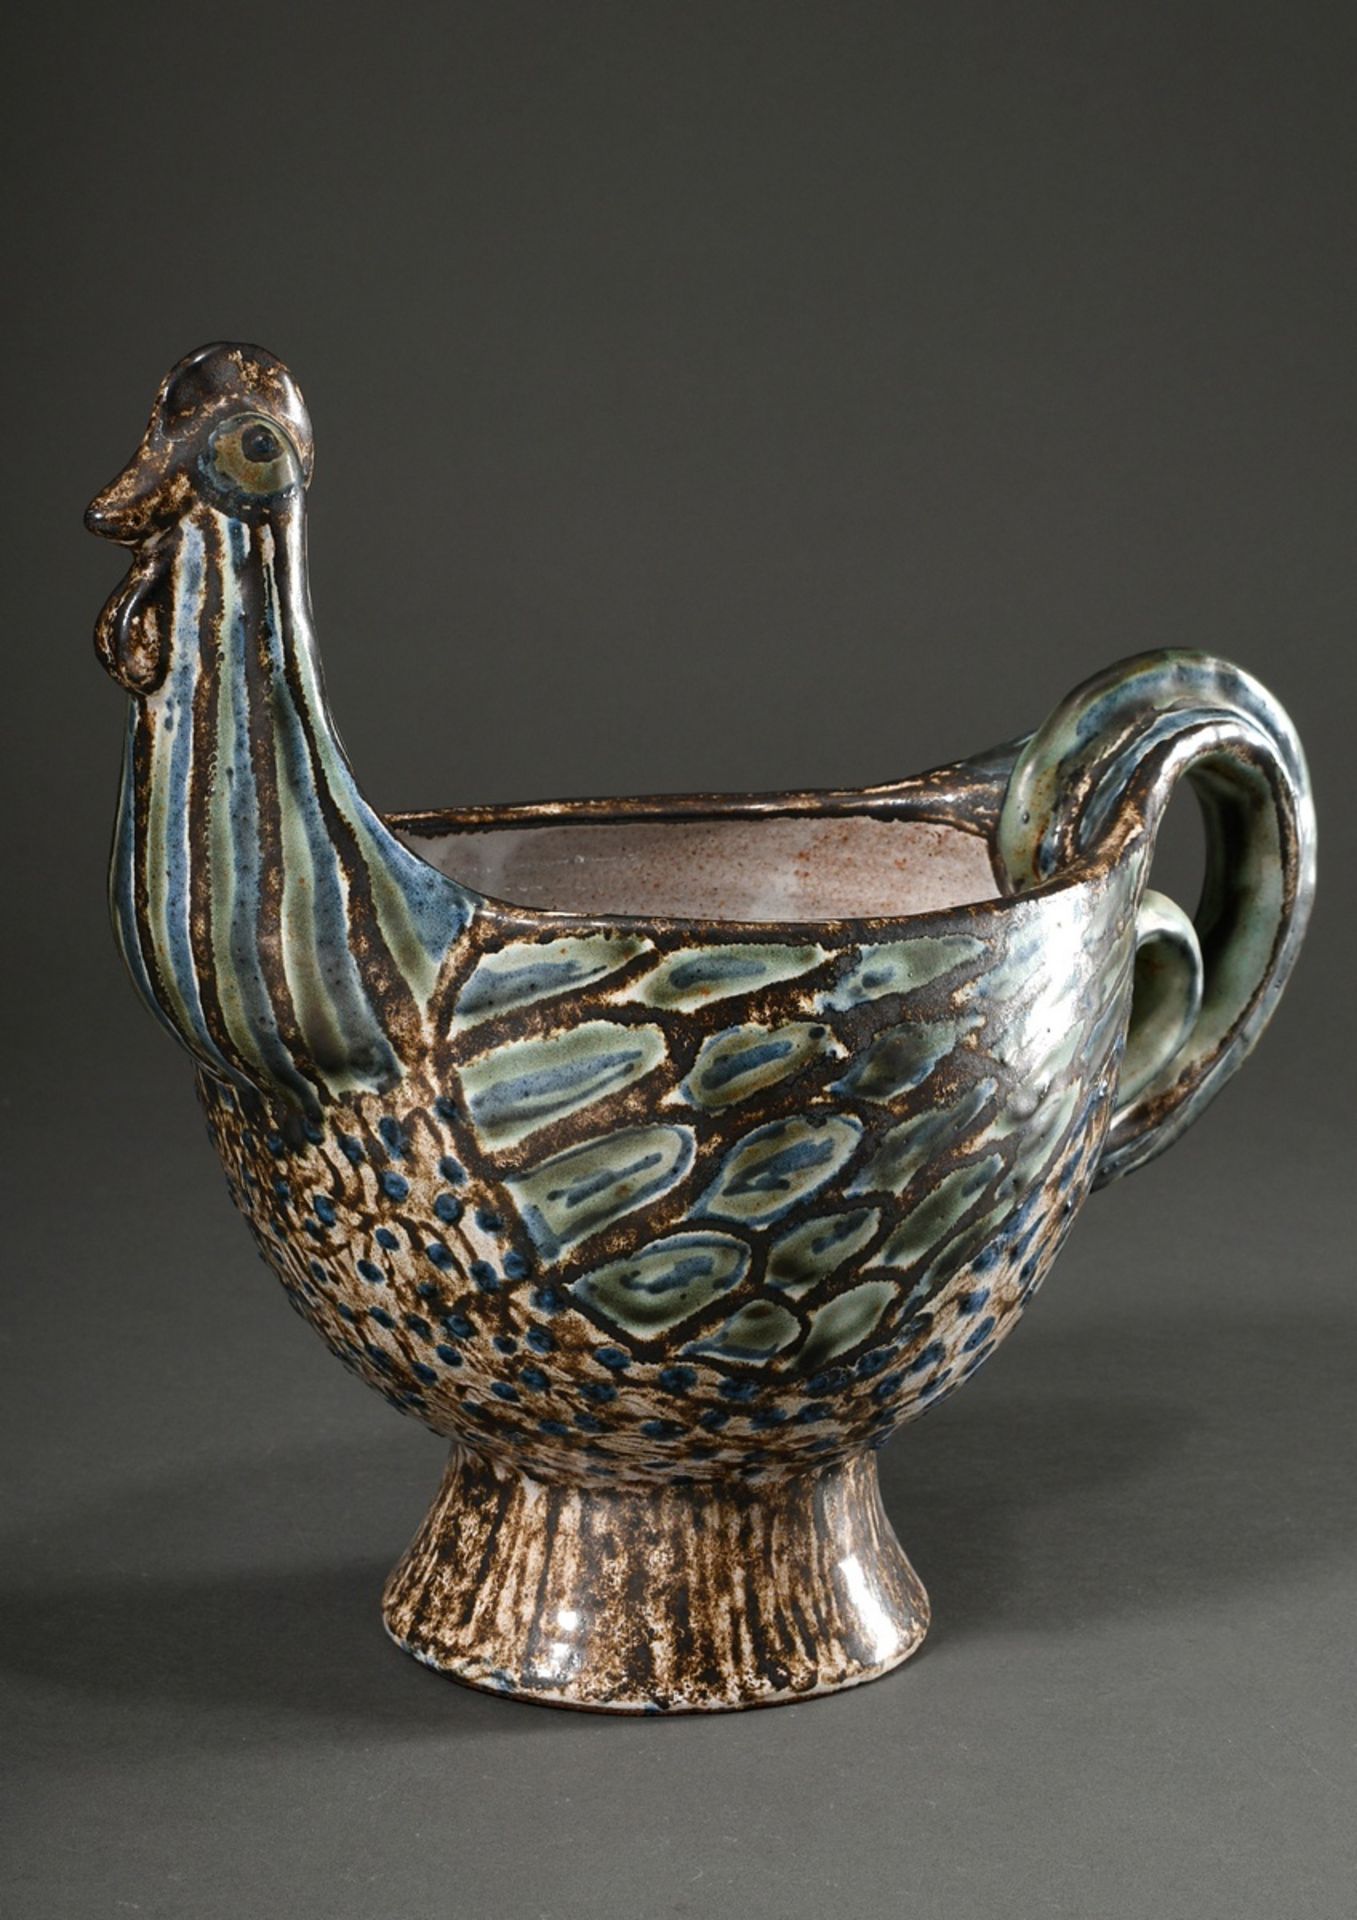 Maetzel, Monika (1917-2010) studio ceramic vessel in animal form "Chicken", ceramic white/green/blu